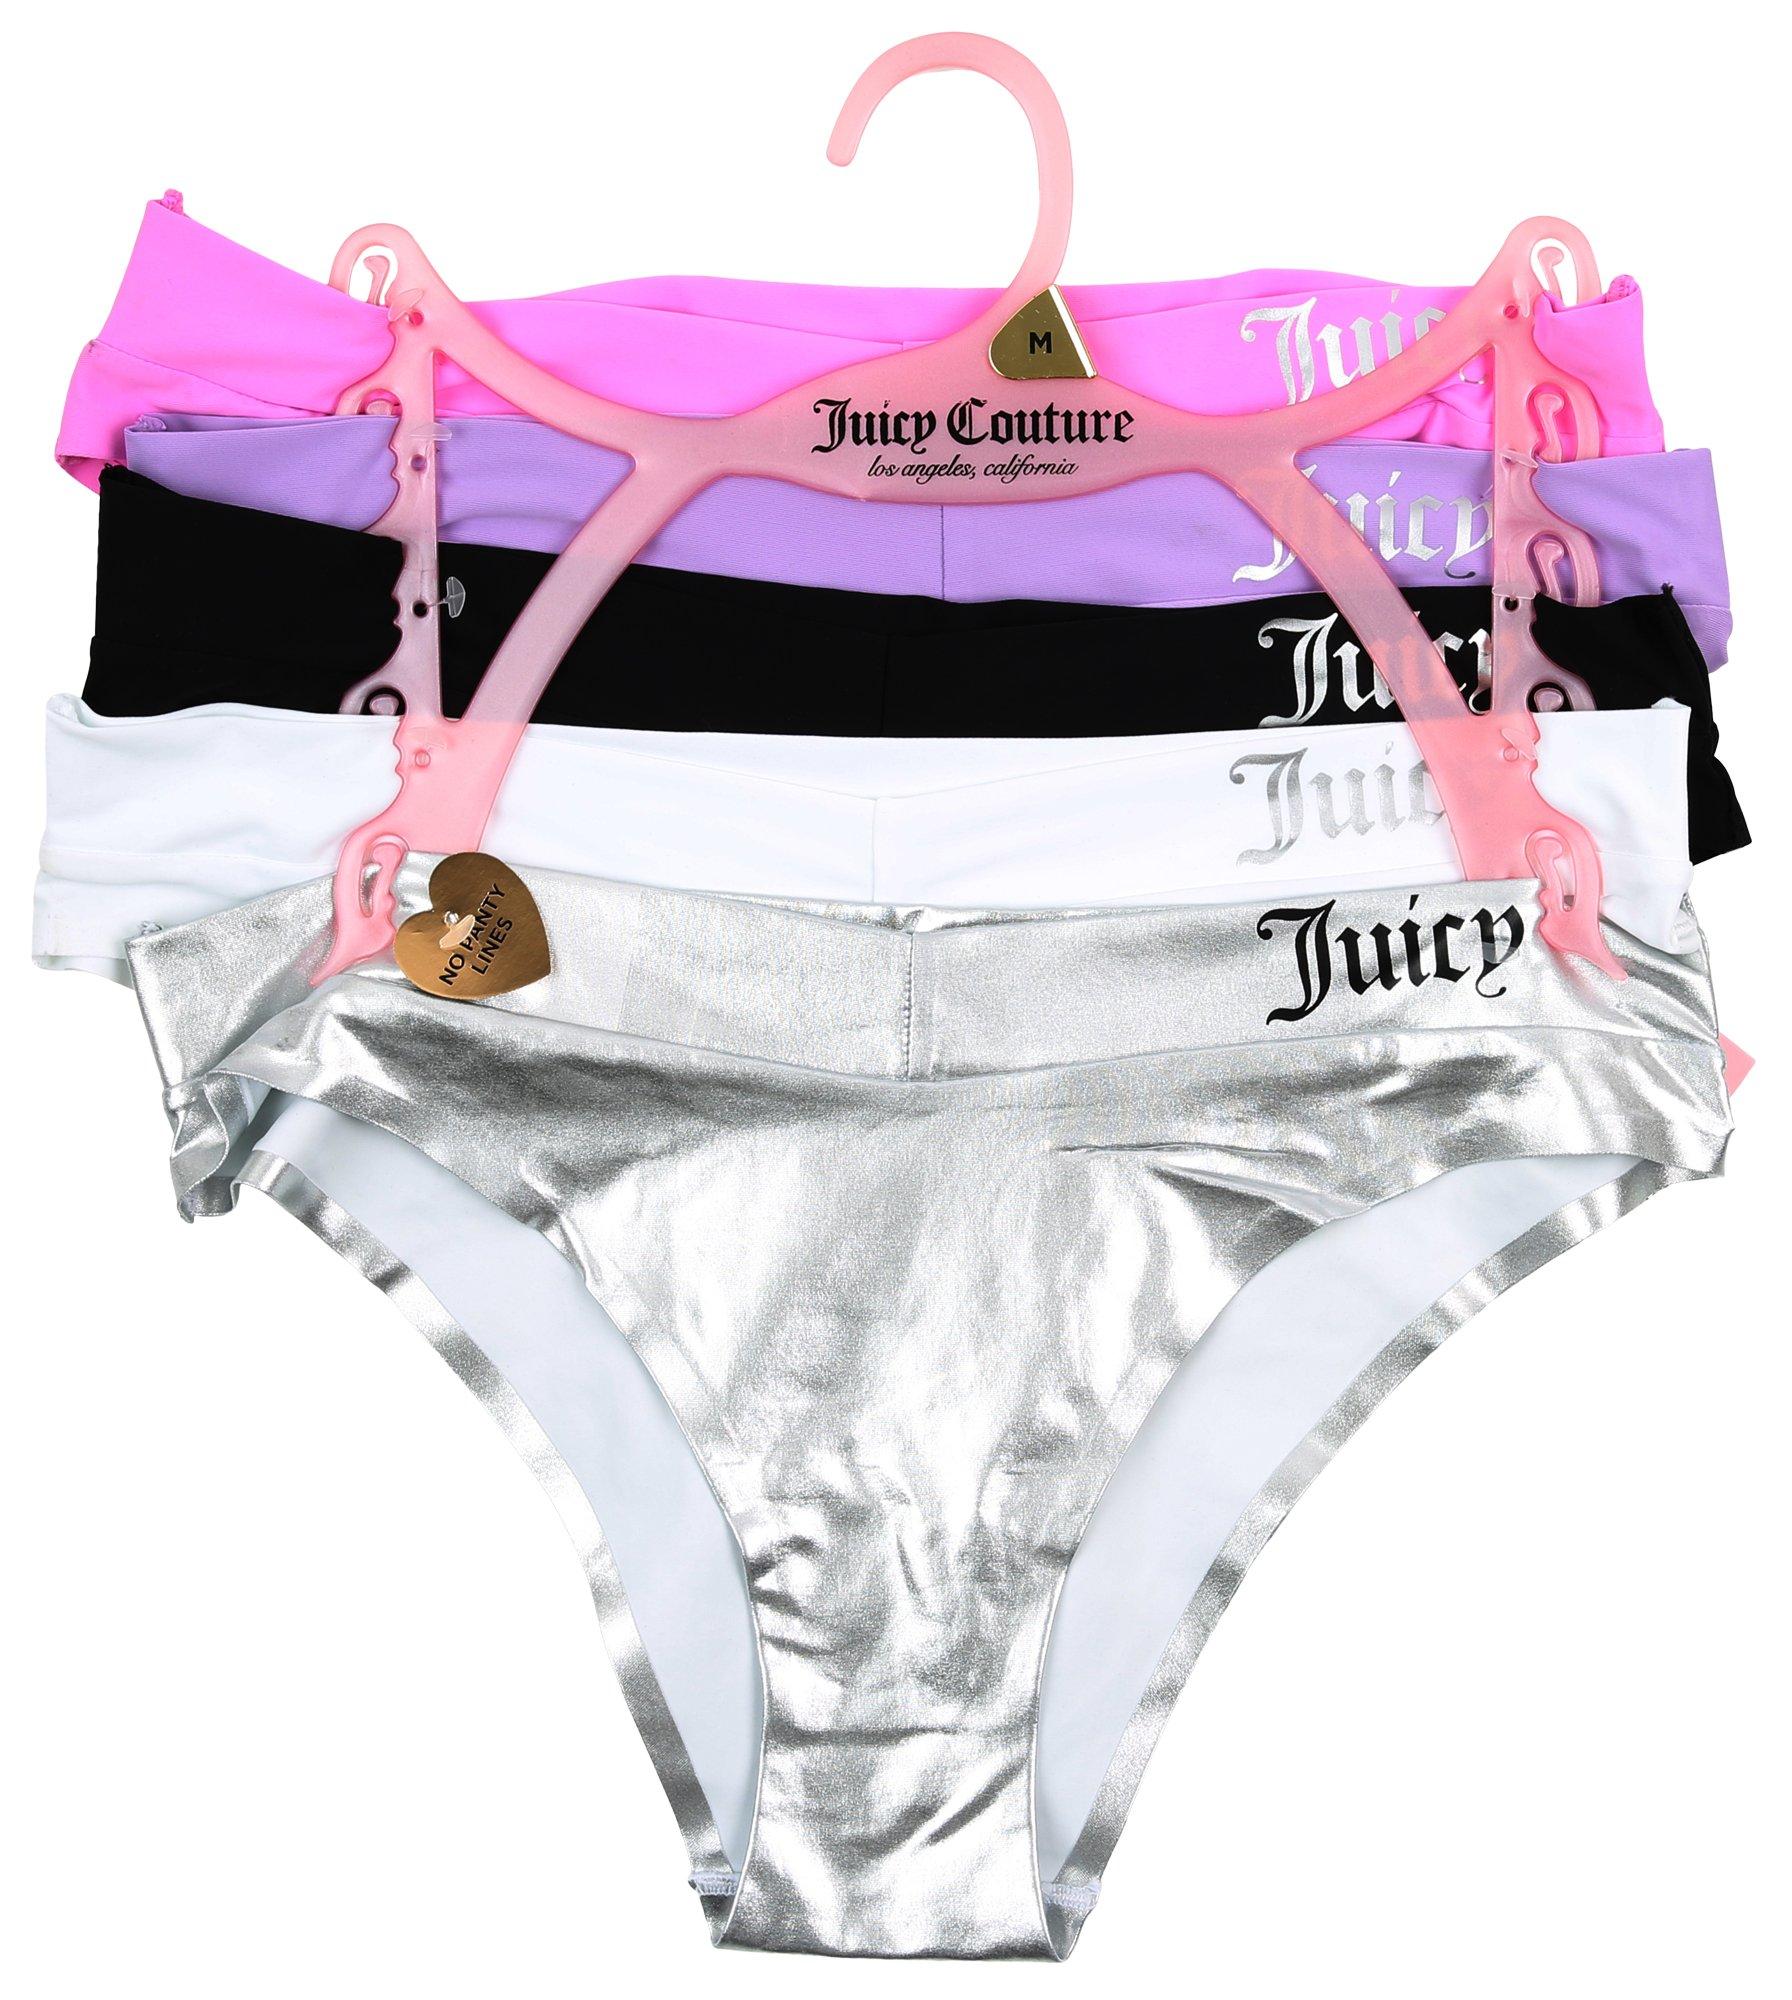 Juicy Couture, Intimates & Sleepwear, Juicy Couture 5 Pack Underwear